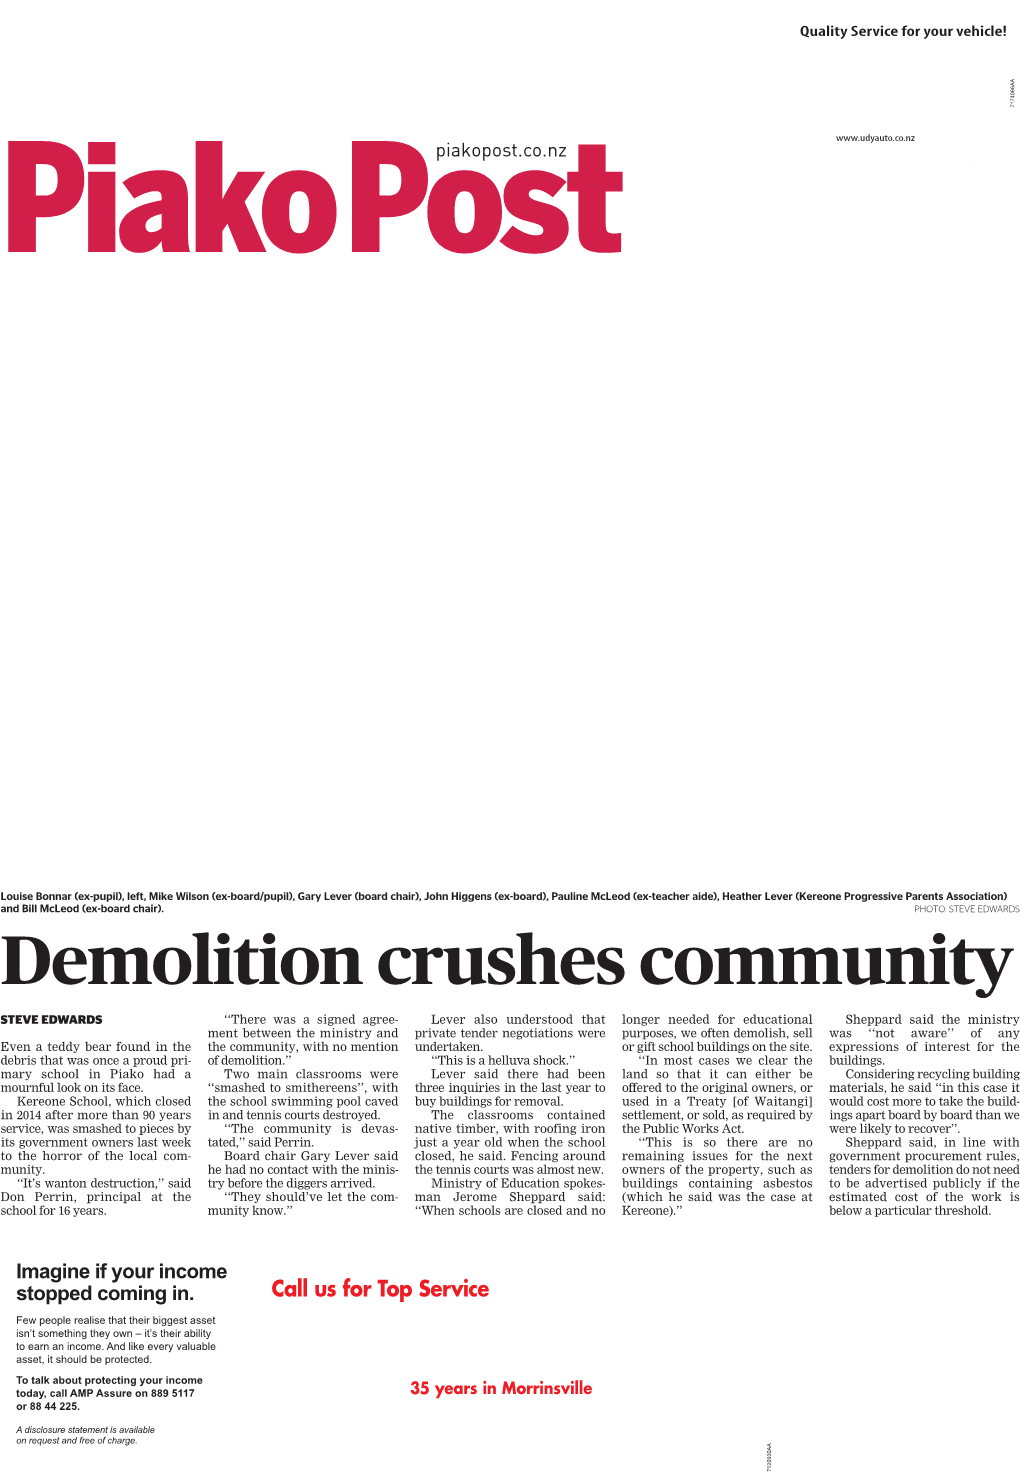 Demolition Crushes Community